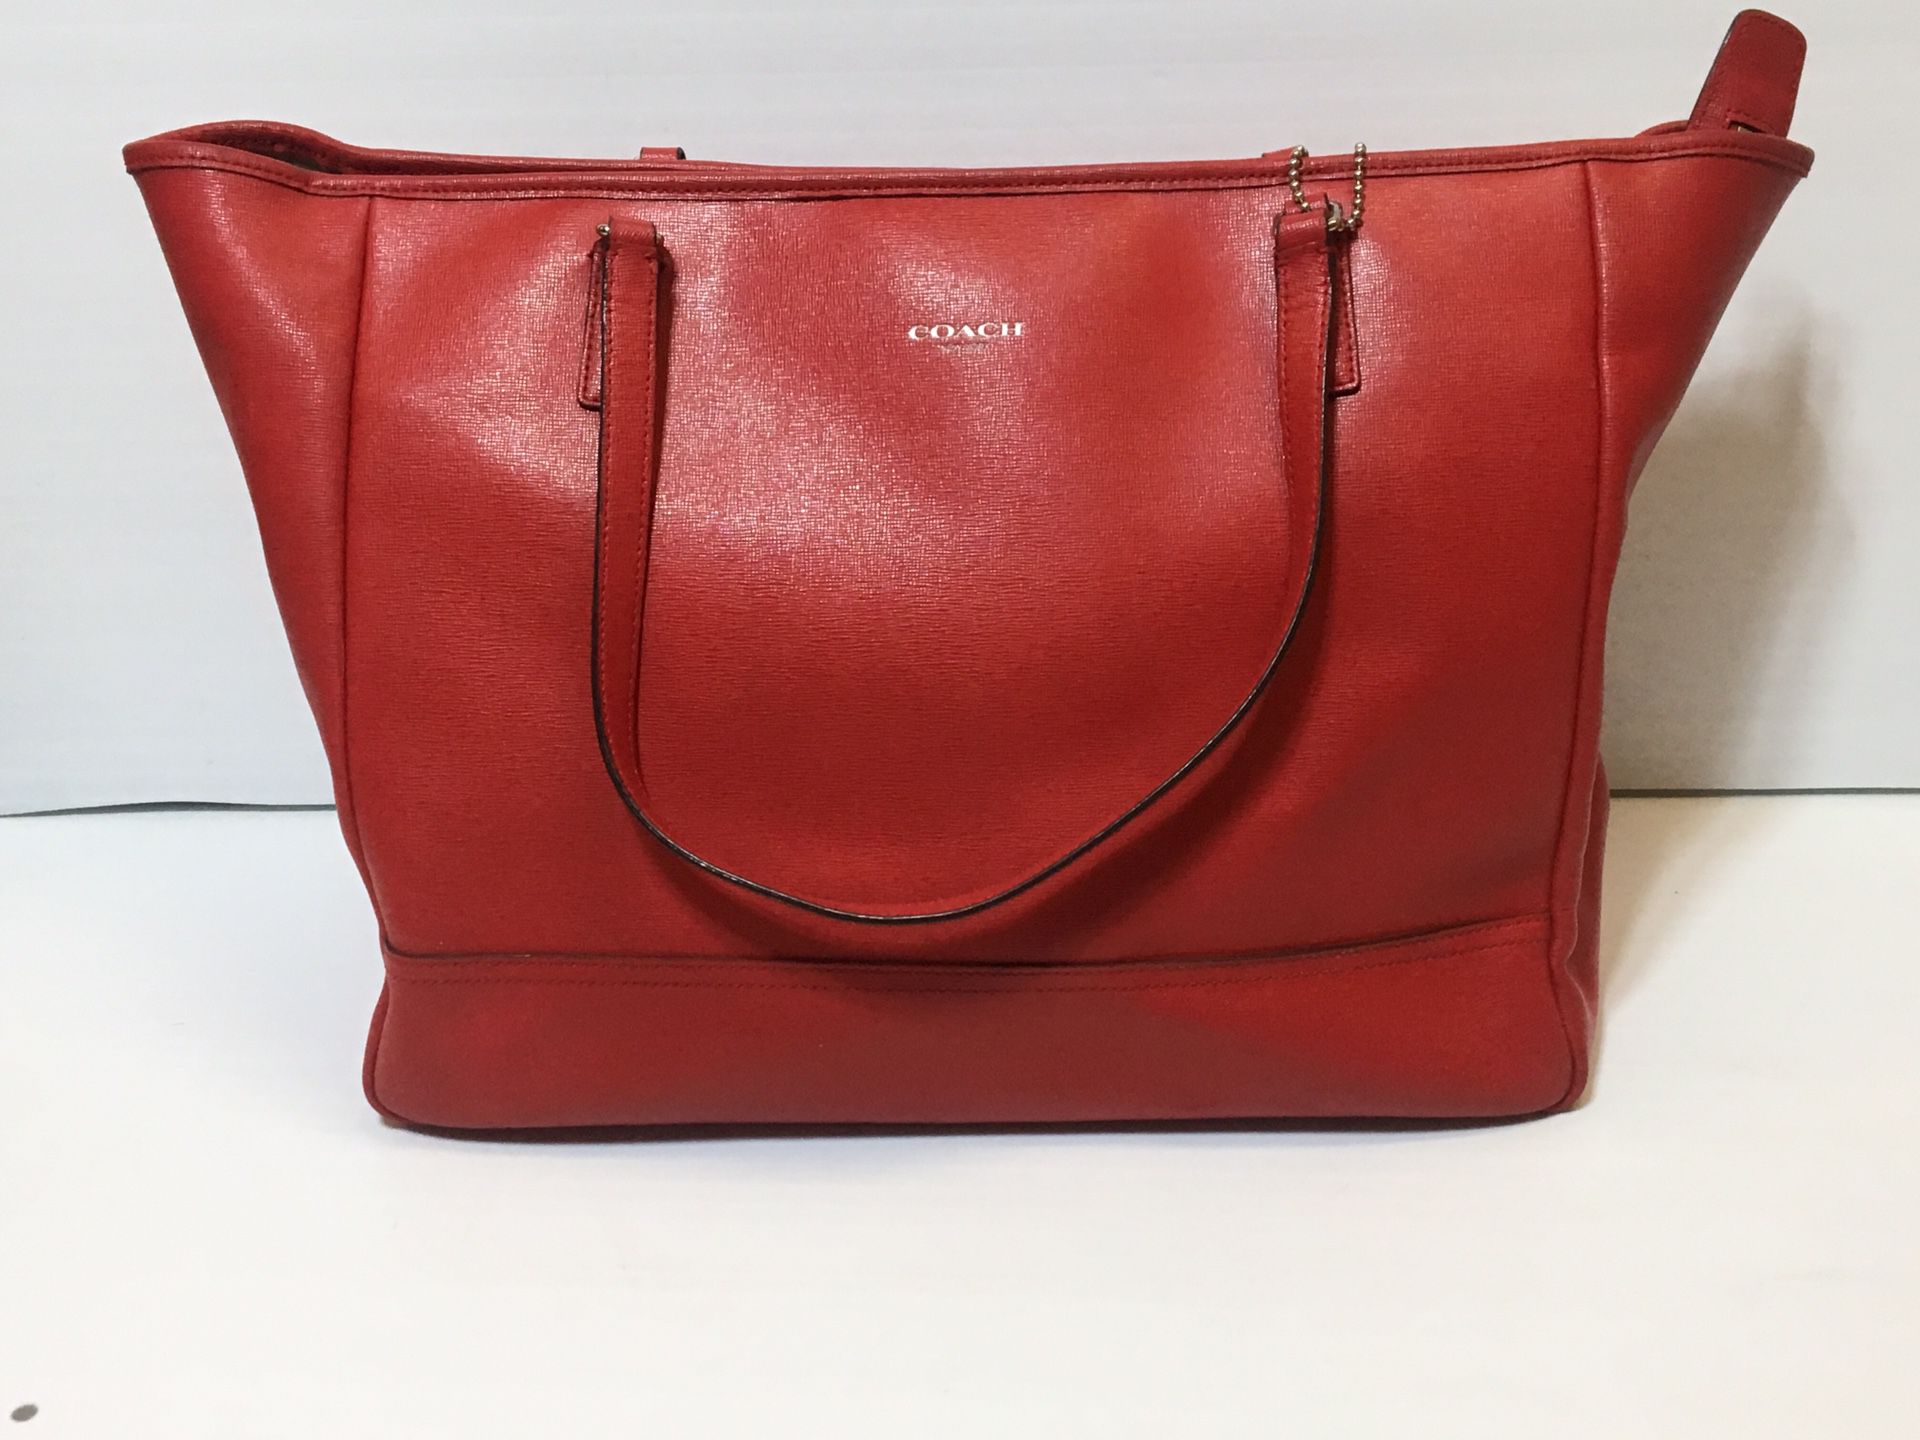 Large COACH Purse / Handbag 100% Authentic (Was $550 new)